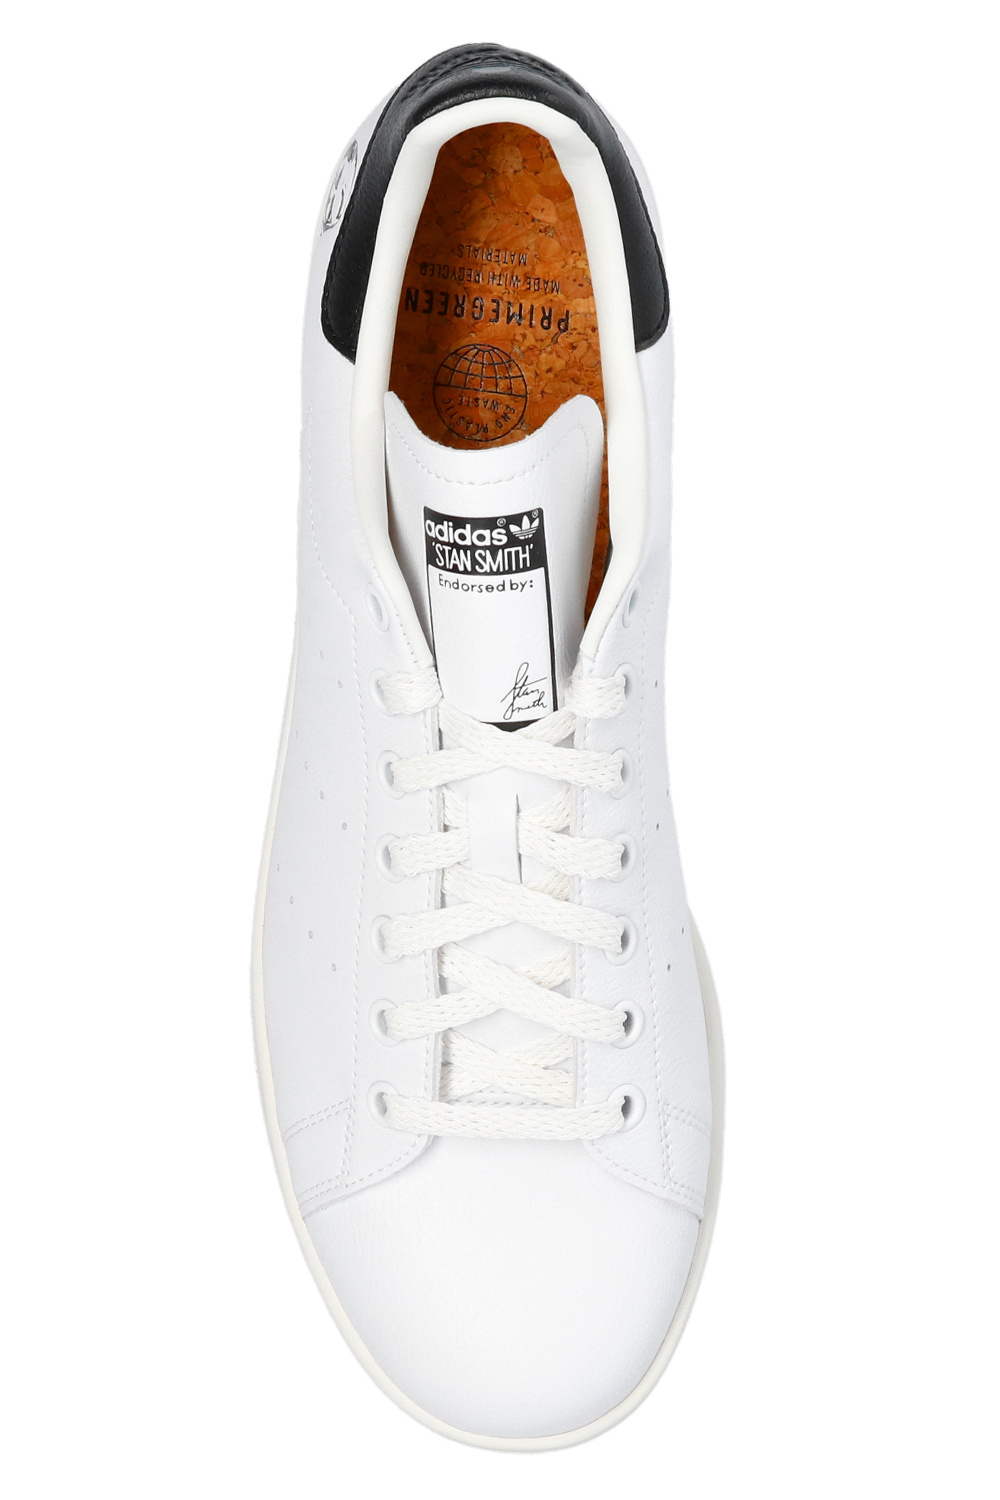 adidas original Originals ‘Stan Smith’ sneakers